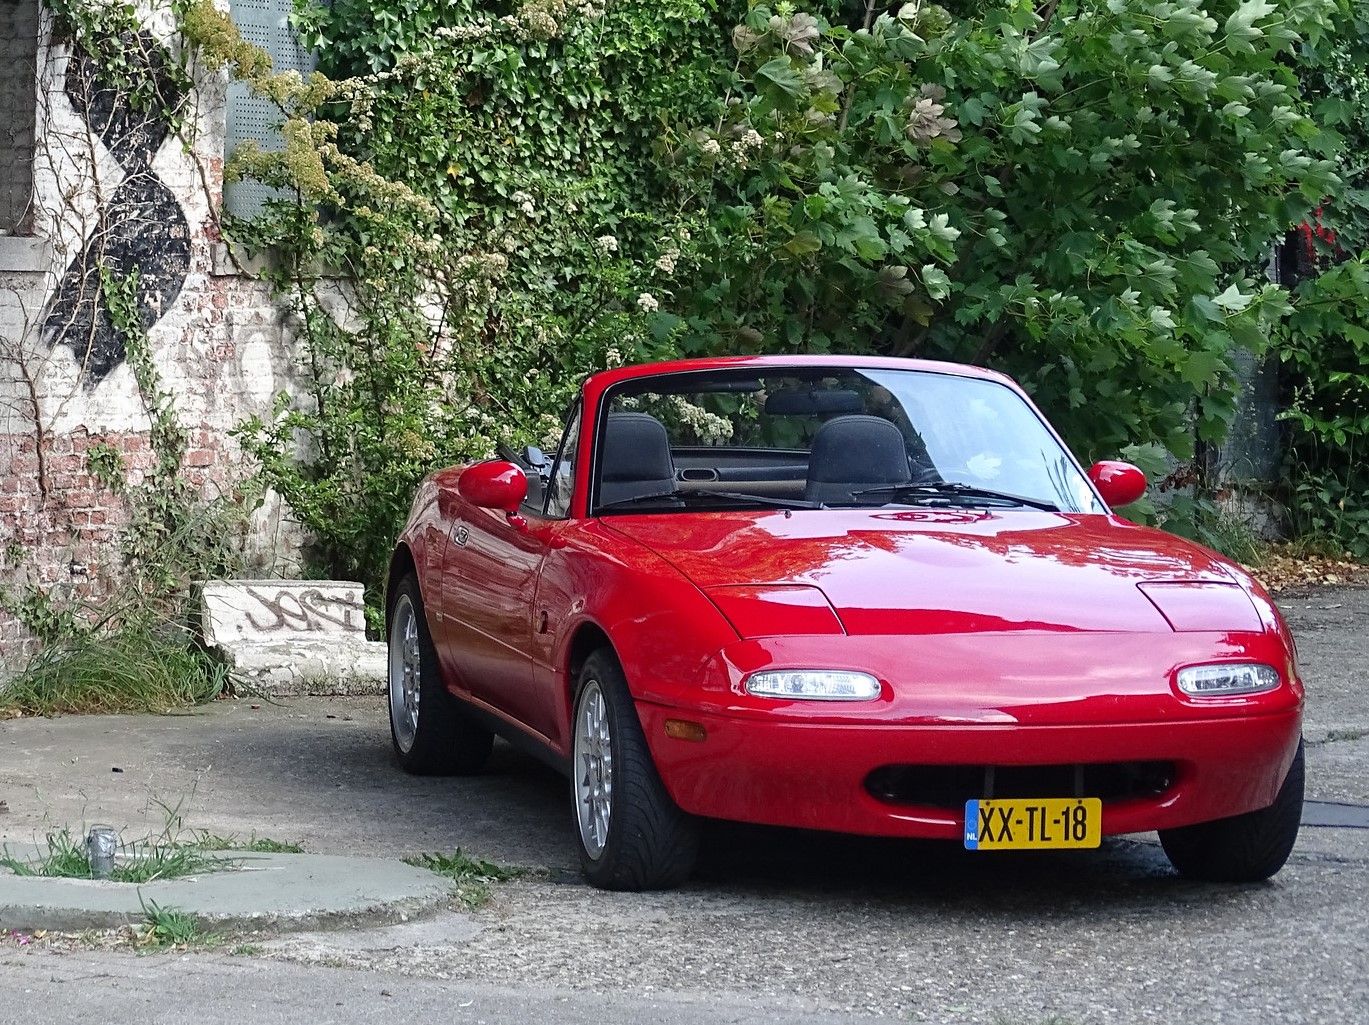 1990 Mazda MX-5 Miata red front street